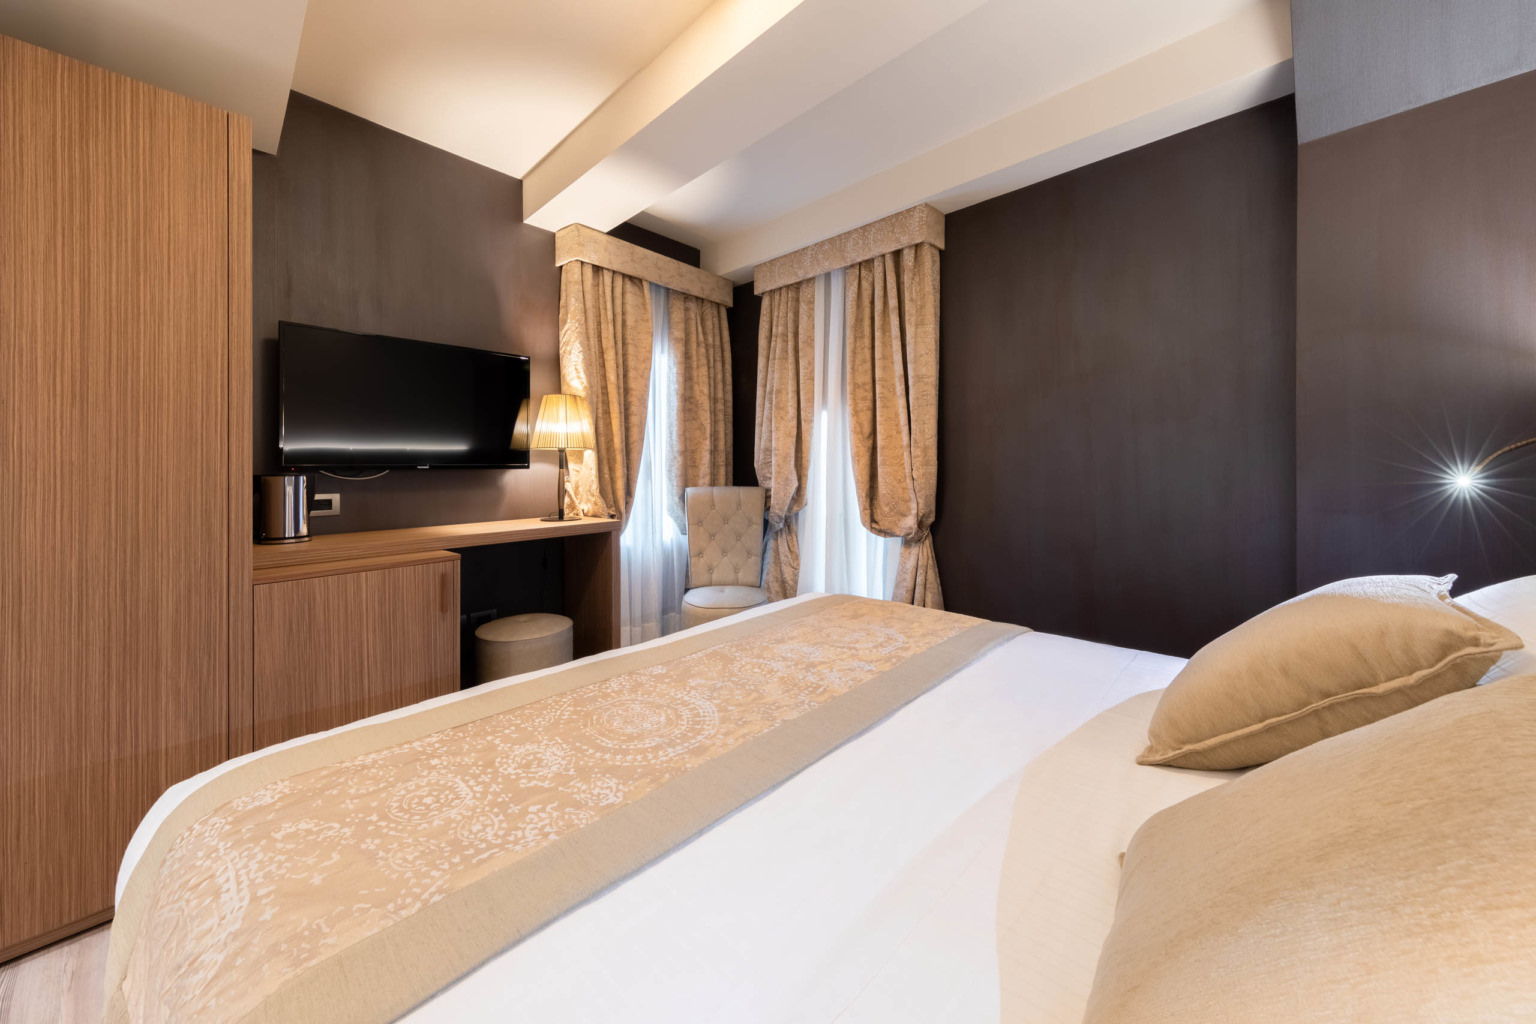 Fotografo camere e suite per l'Hotel Aquarius a Venezia